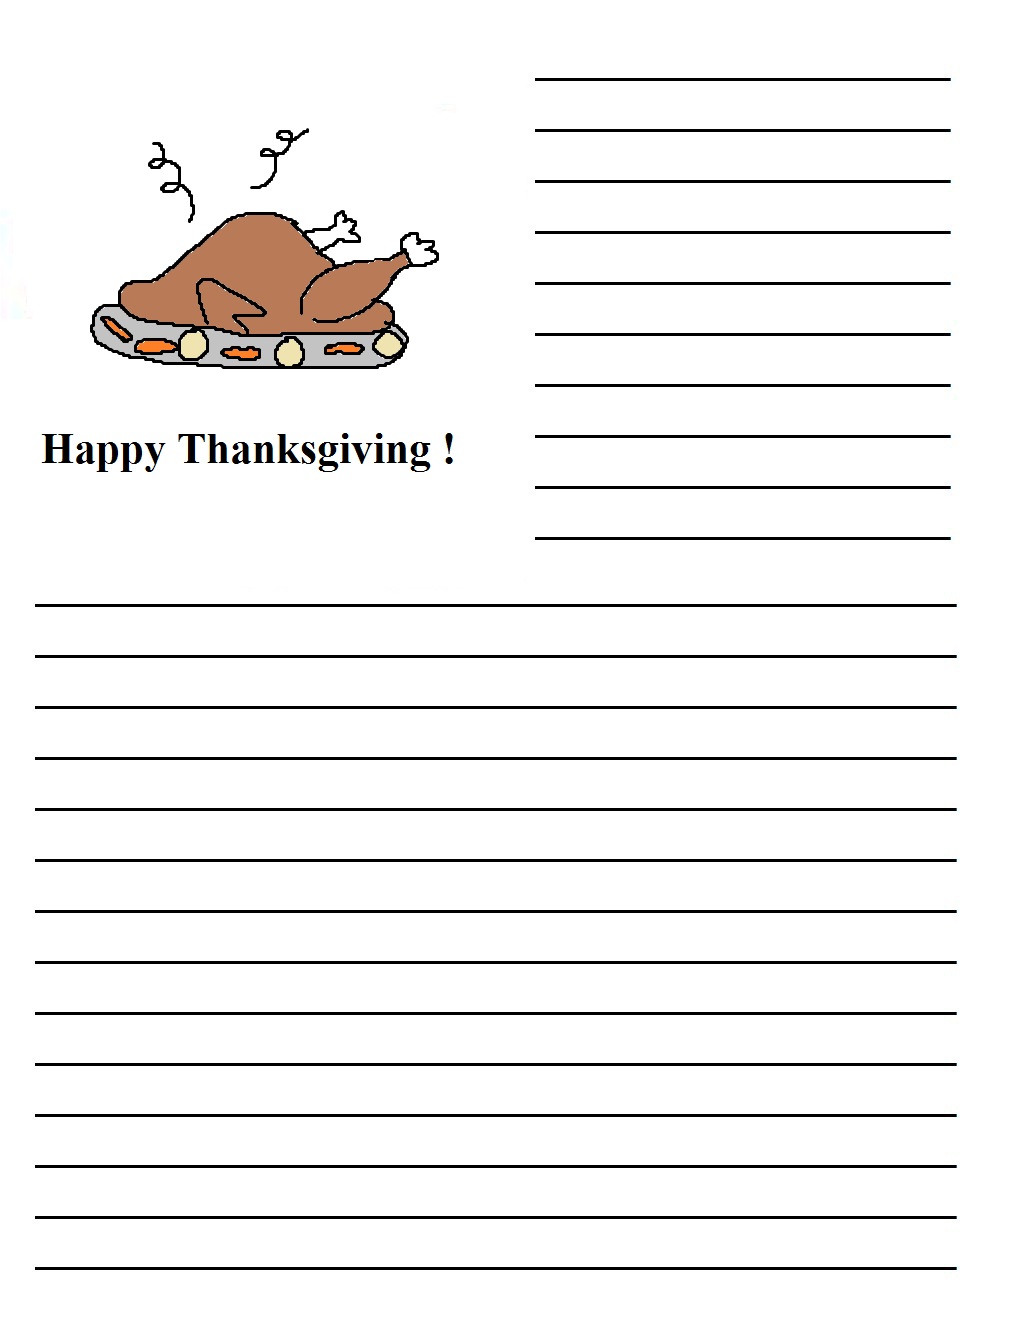 Thanksgiving essay prompts